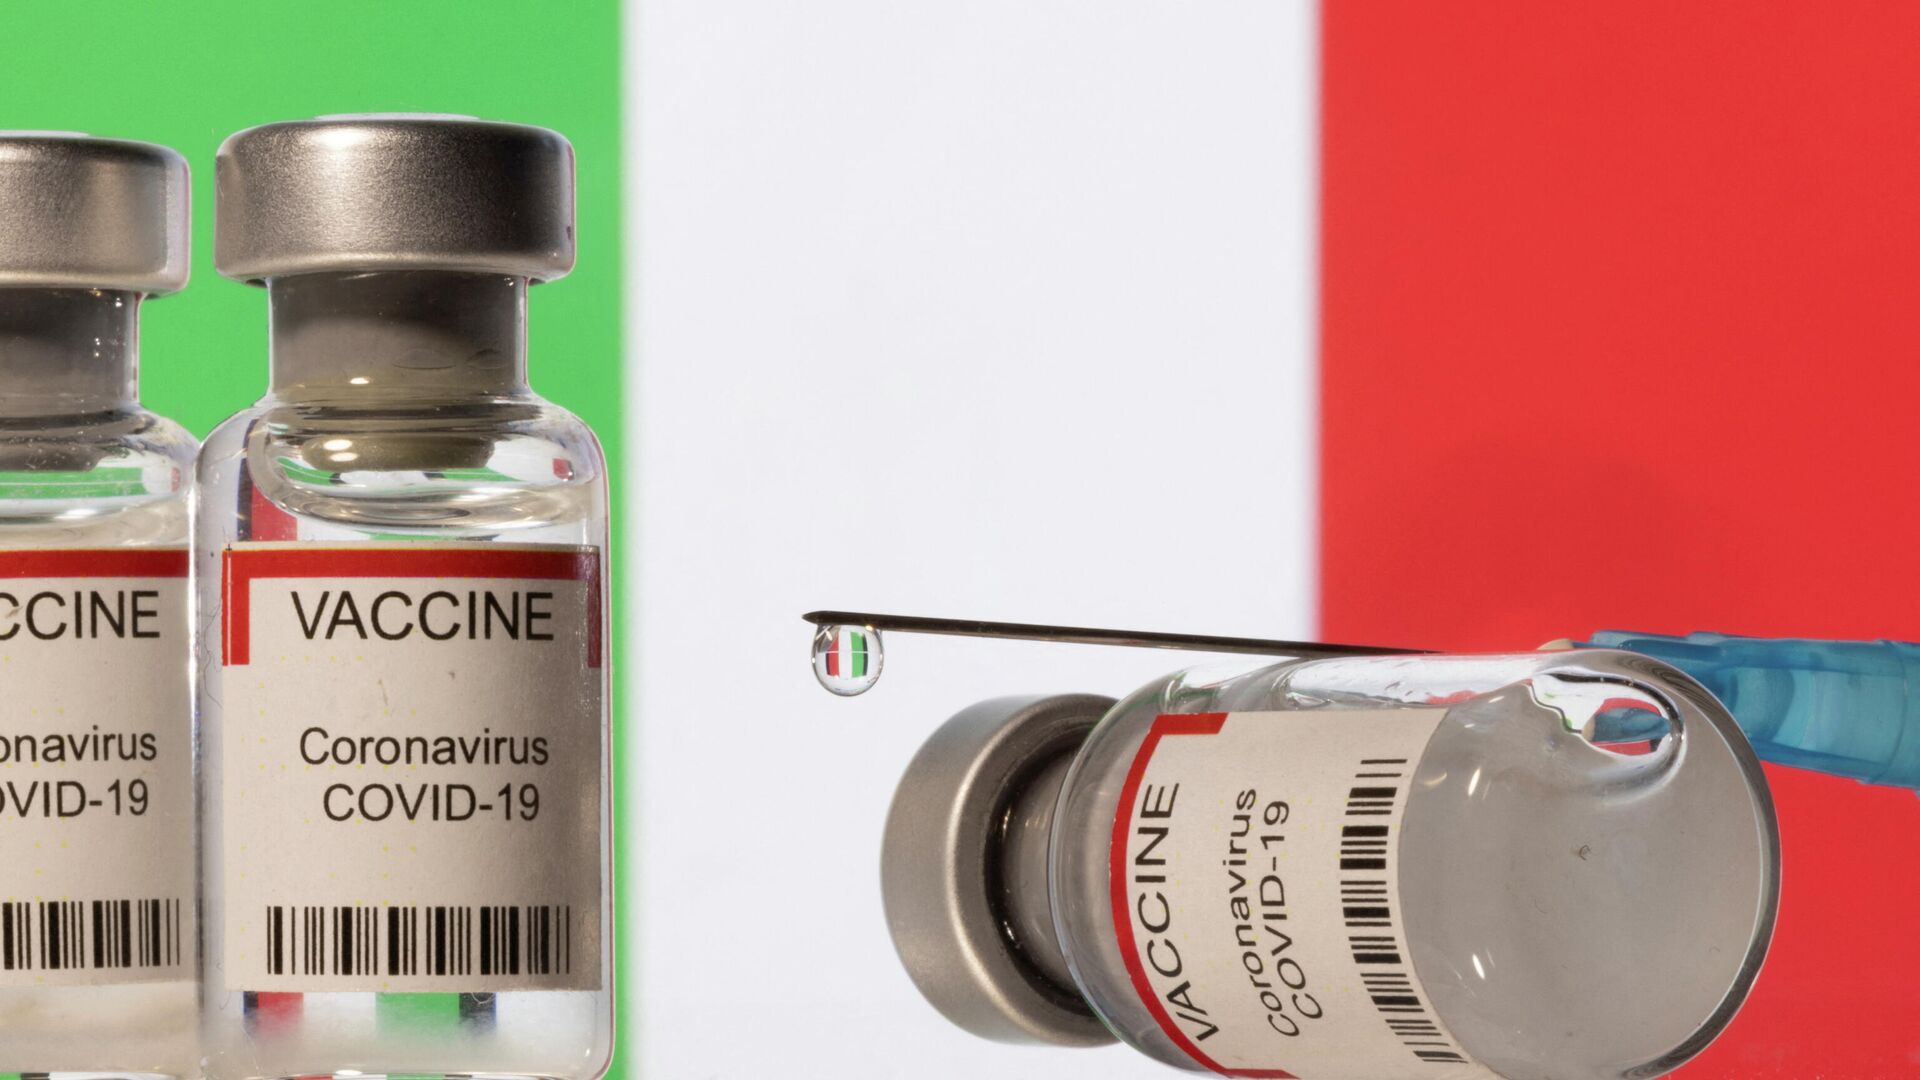 Vacunas con la bandera italiana - Sputnik Mundo, 1920, 16.12.2021